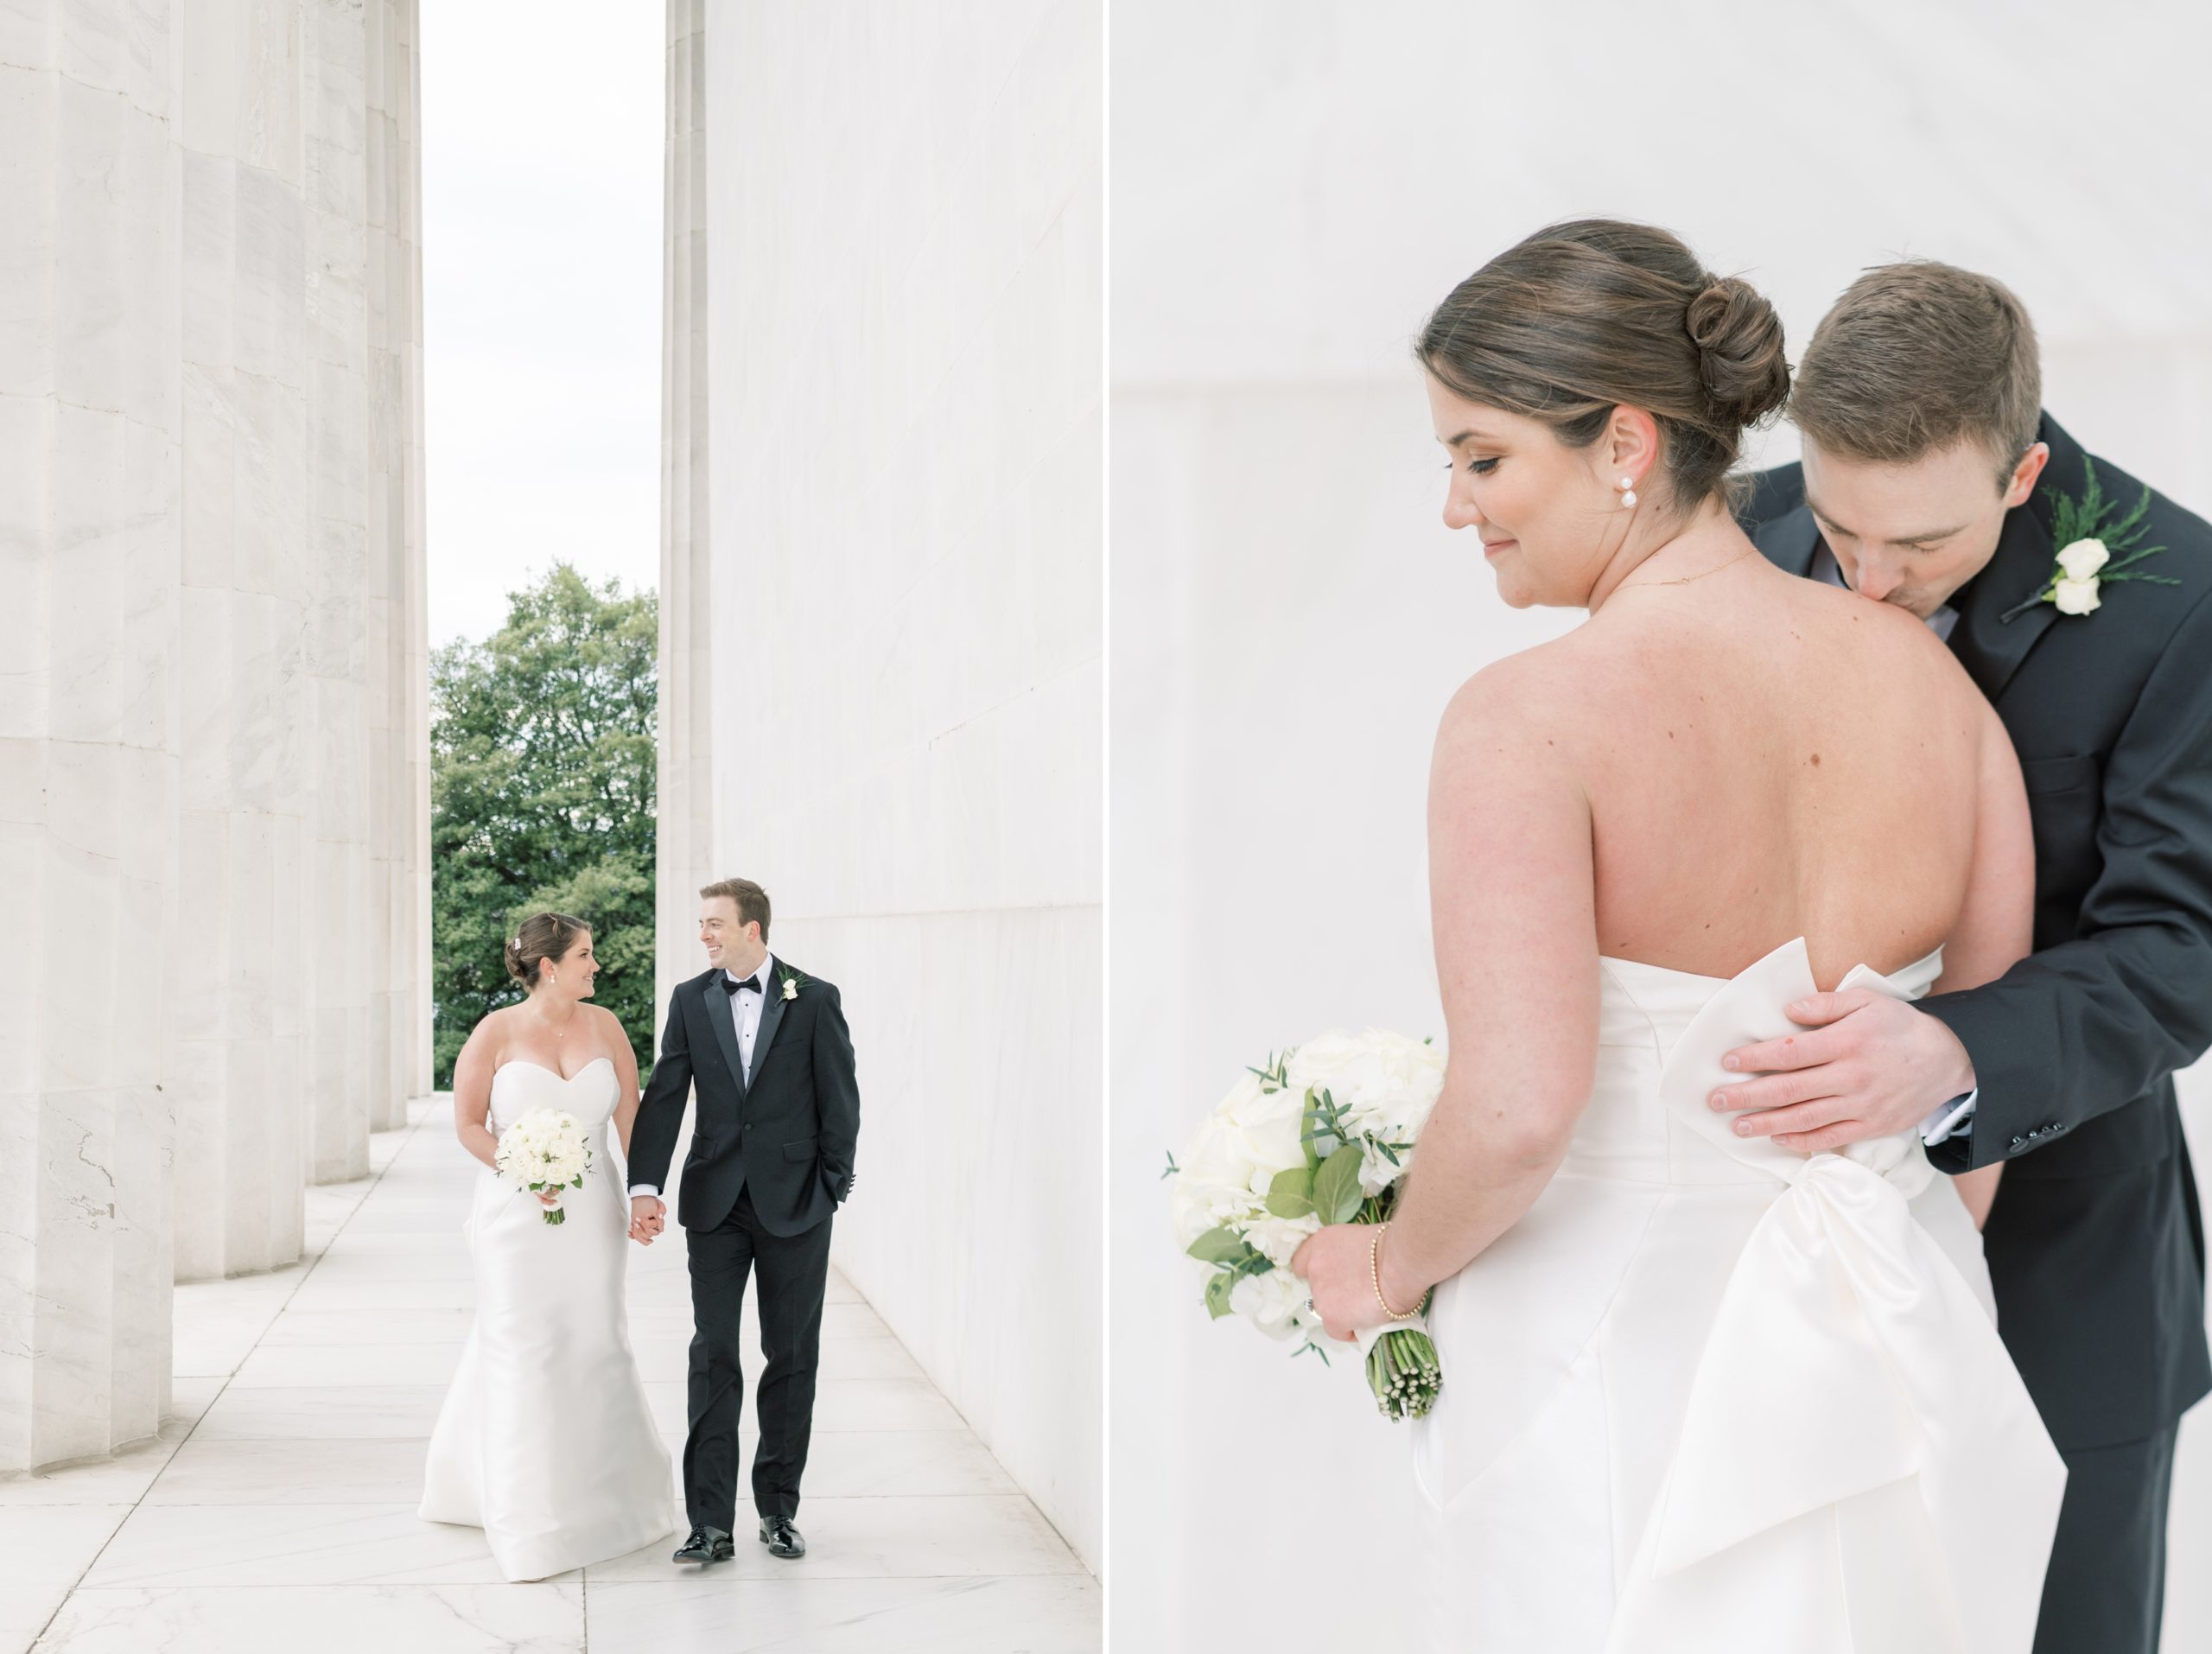 An elegant wintry wedding at the Mayflower Hotel in Washington, DC.